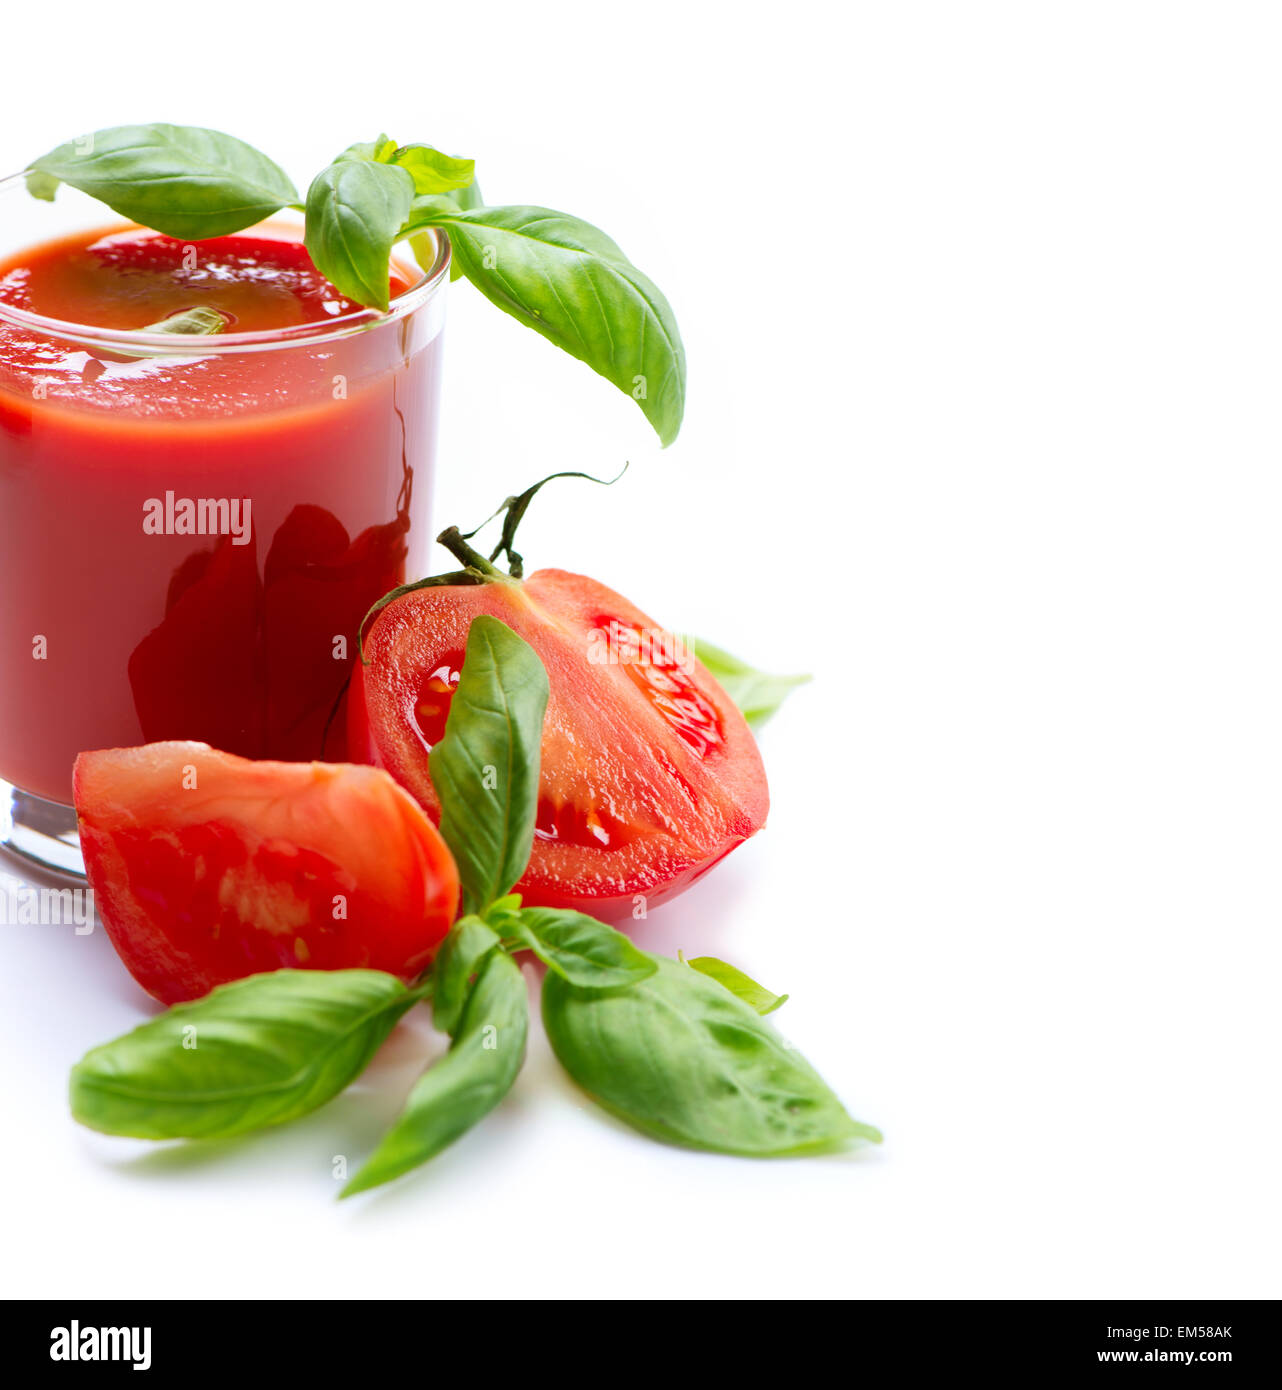 Tomato Juice and Fresh Tomatoes isolated on a White Background Stock Photo